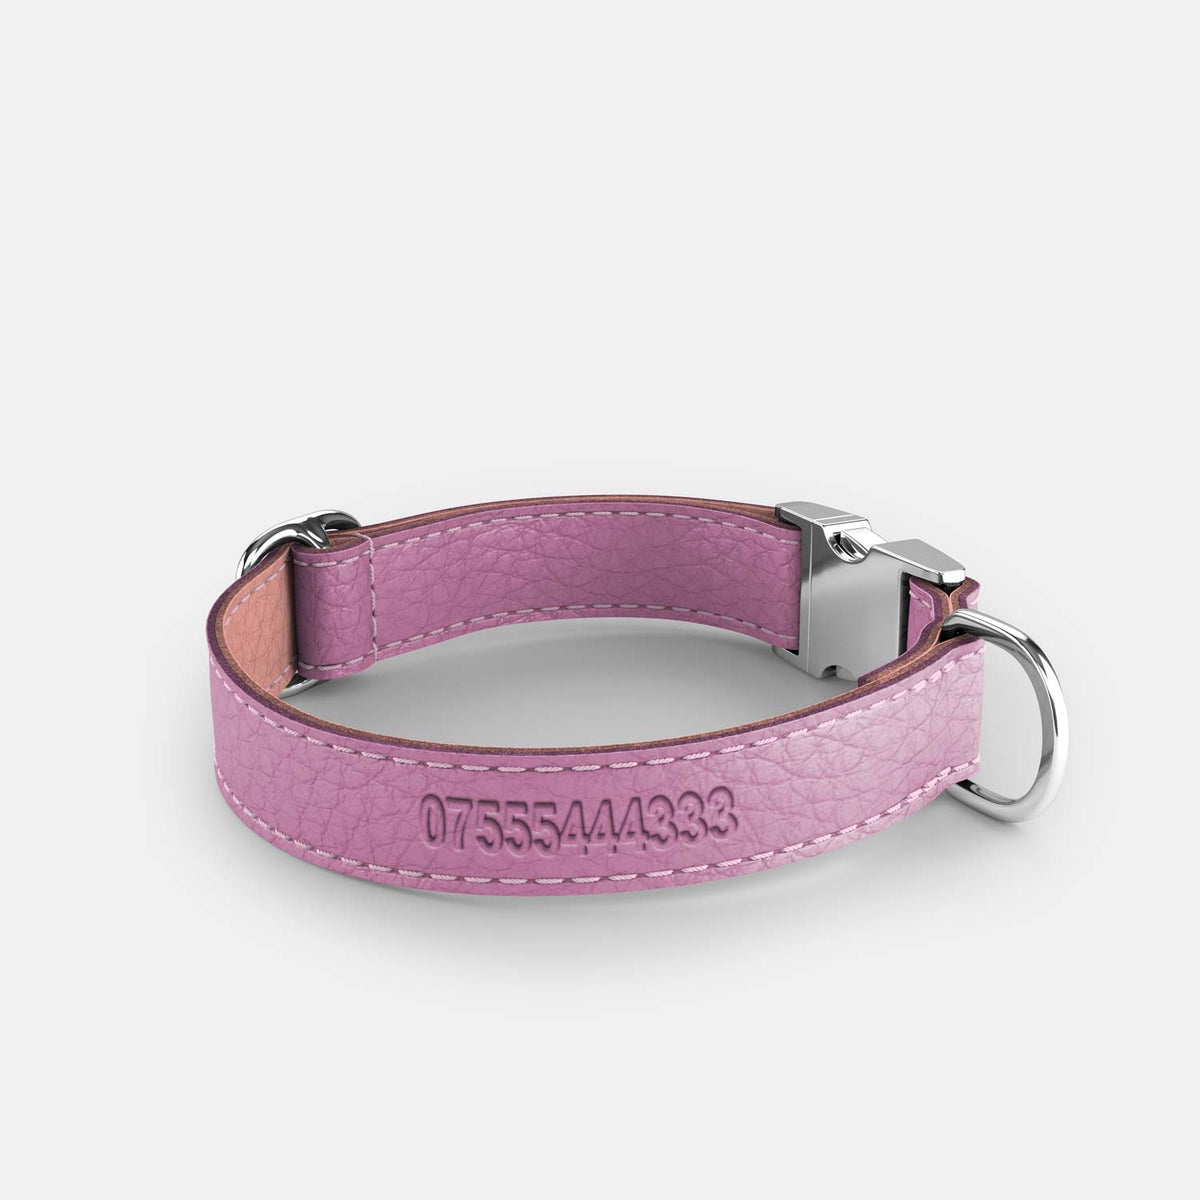 Leather Dog Collar - Purple and Pink - RYAN London